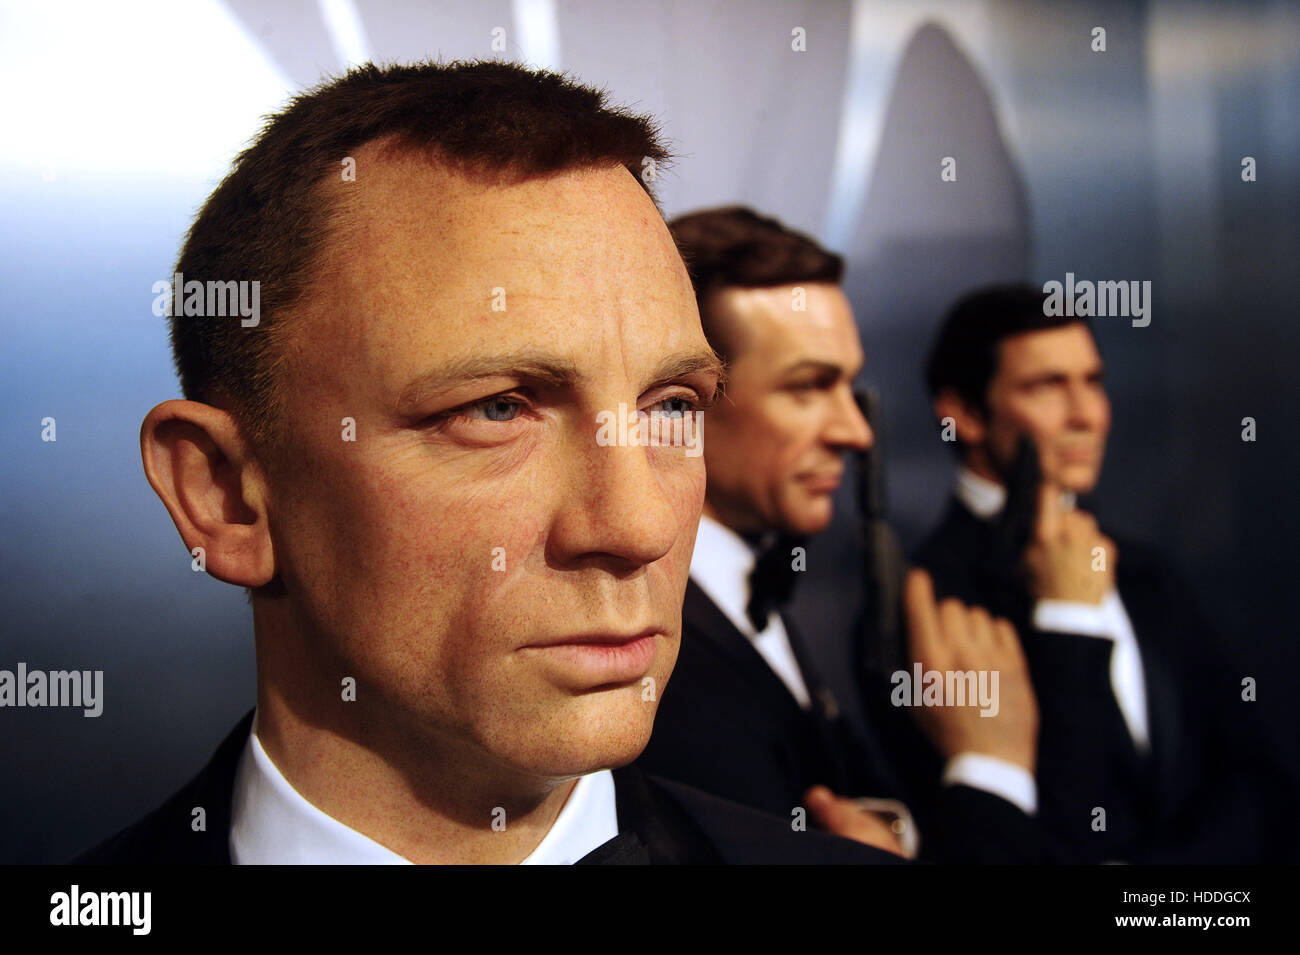 Madame Tussauds unveils six James Bond wax figures. Featuring ...